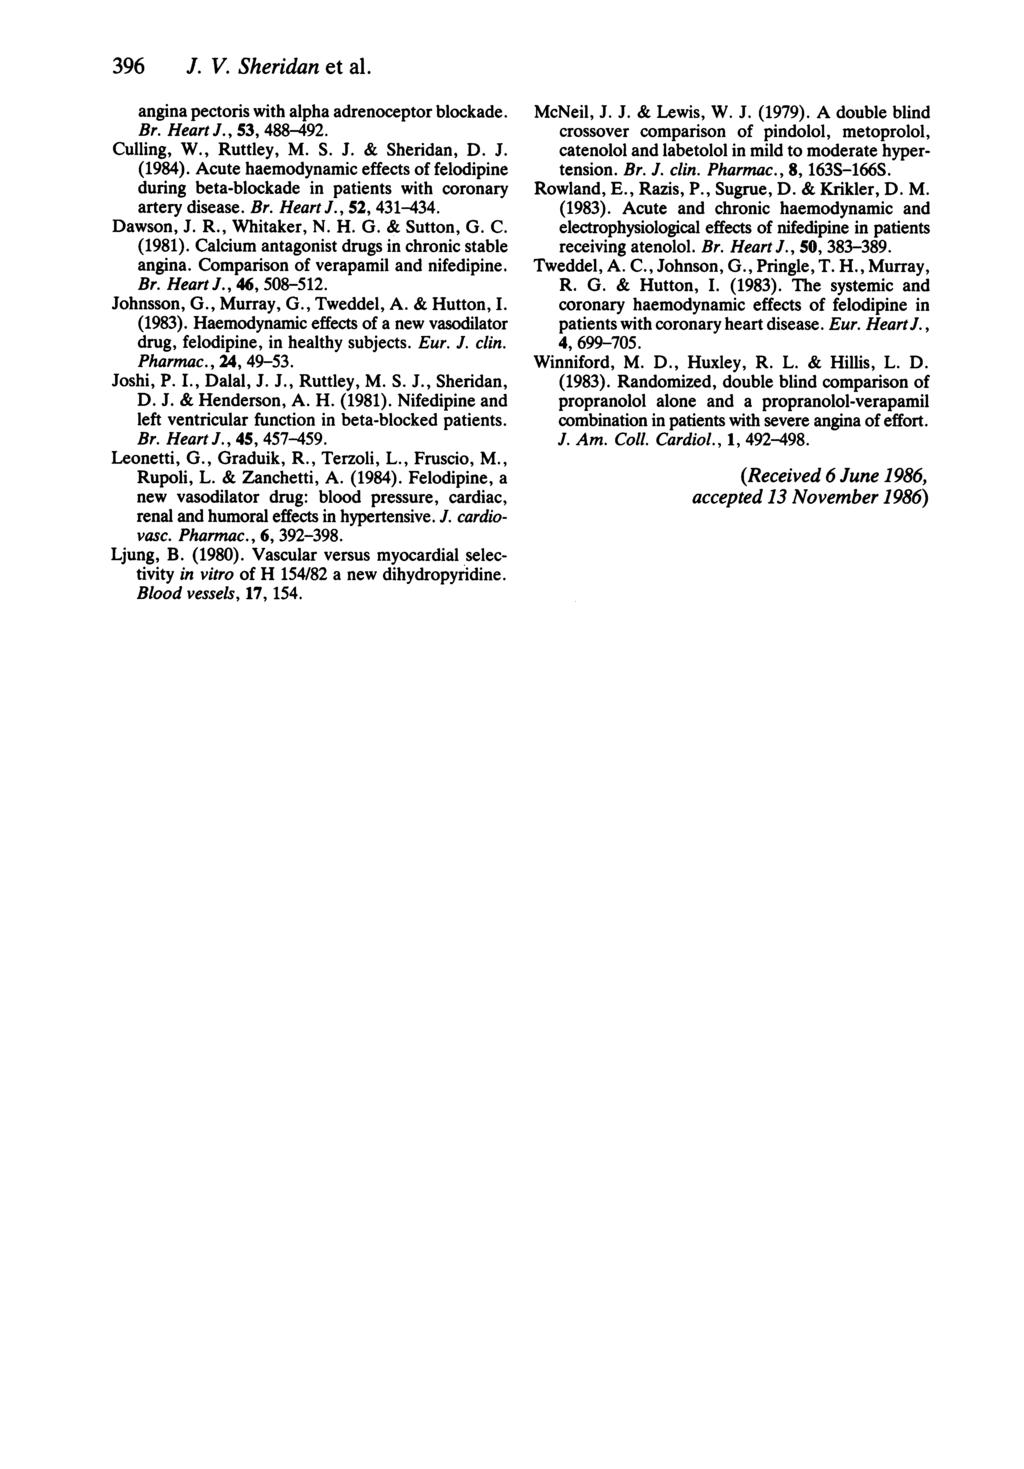 396 J. V. Sheridan et al. angina pectoris with alpha adrenoceptor blockade. Br. Heart J., 53, 488-492. Culling, W., Ruttley, M. S. J. & Sheridan, D. J. (1984).